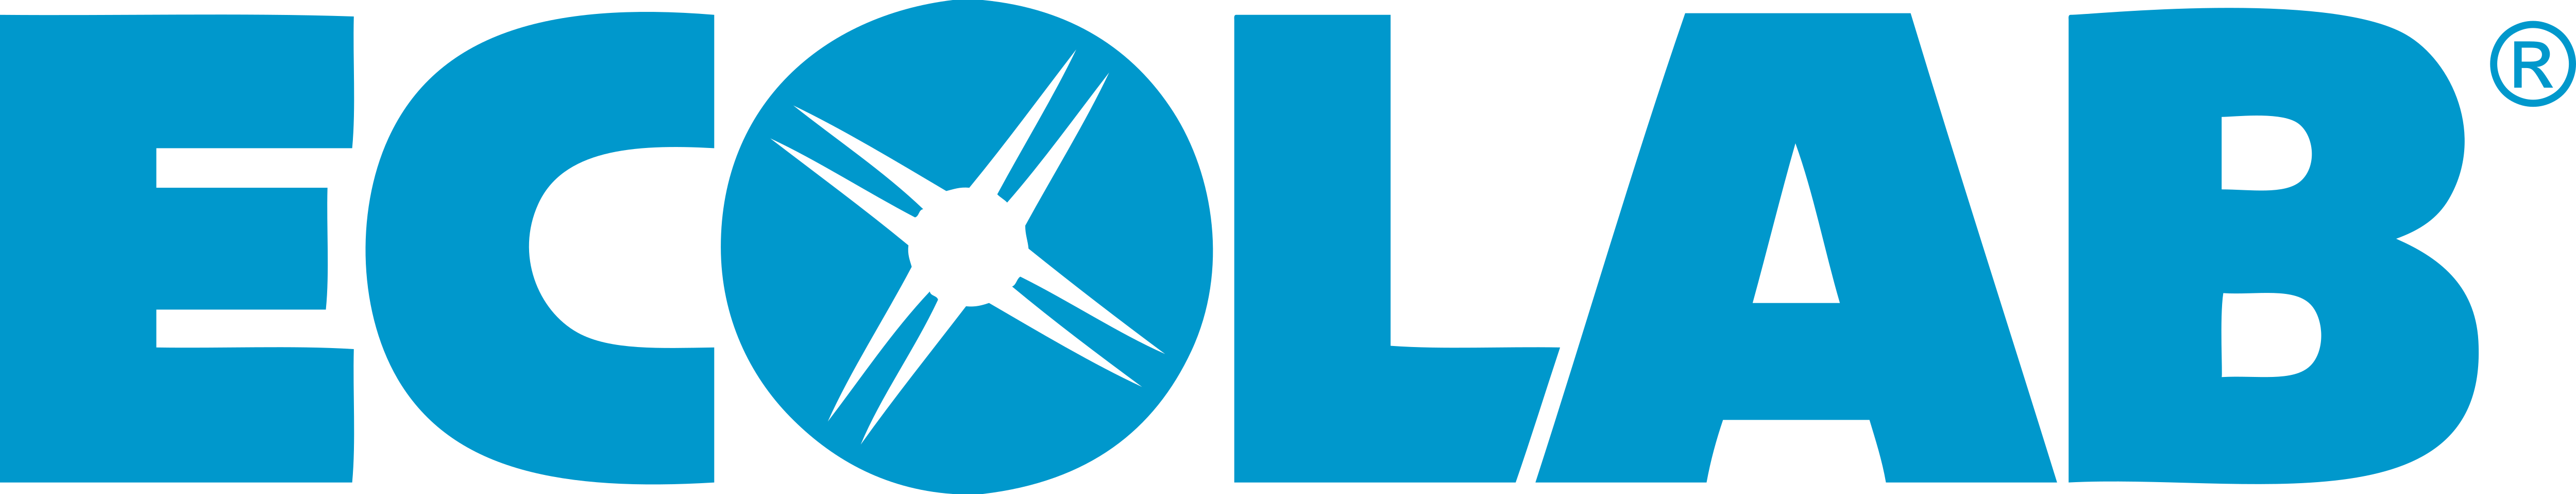 Ecolab_Logo